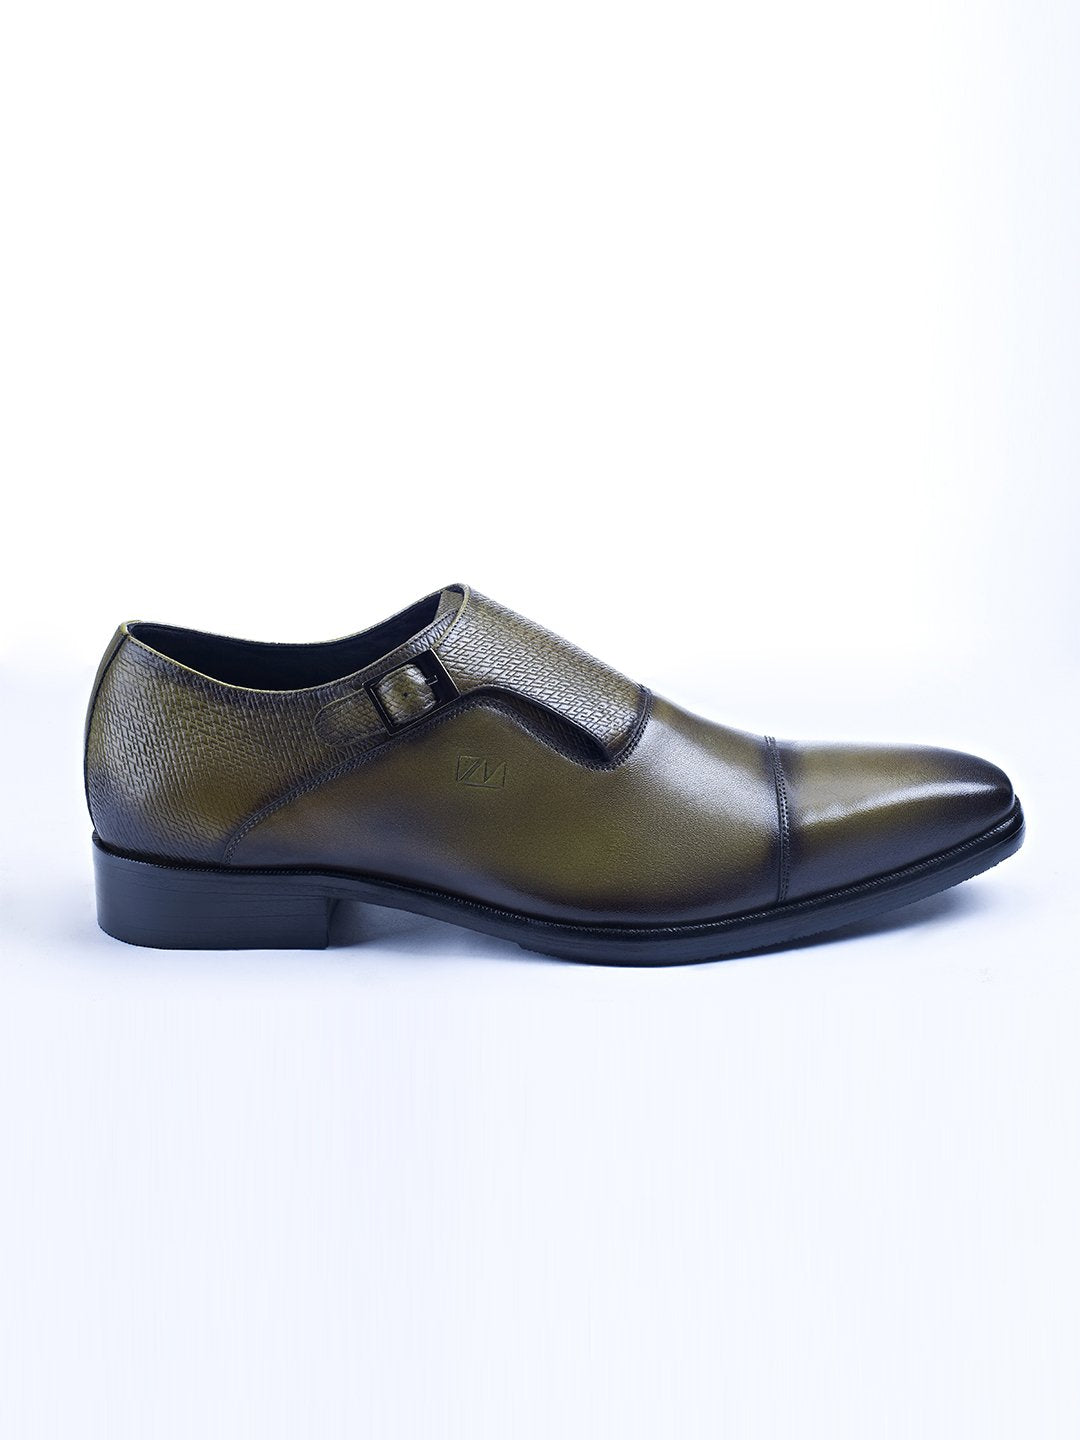 Single Buckle Monk Shoes With Zm Embossed Detail (Olive) - Zest Mélange 